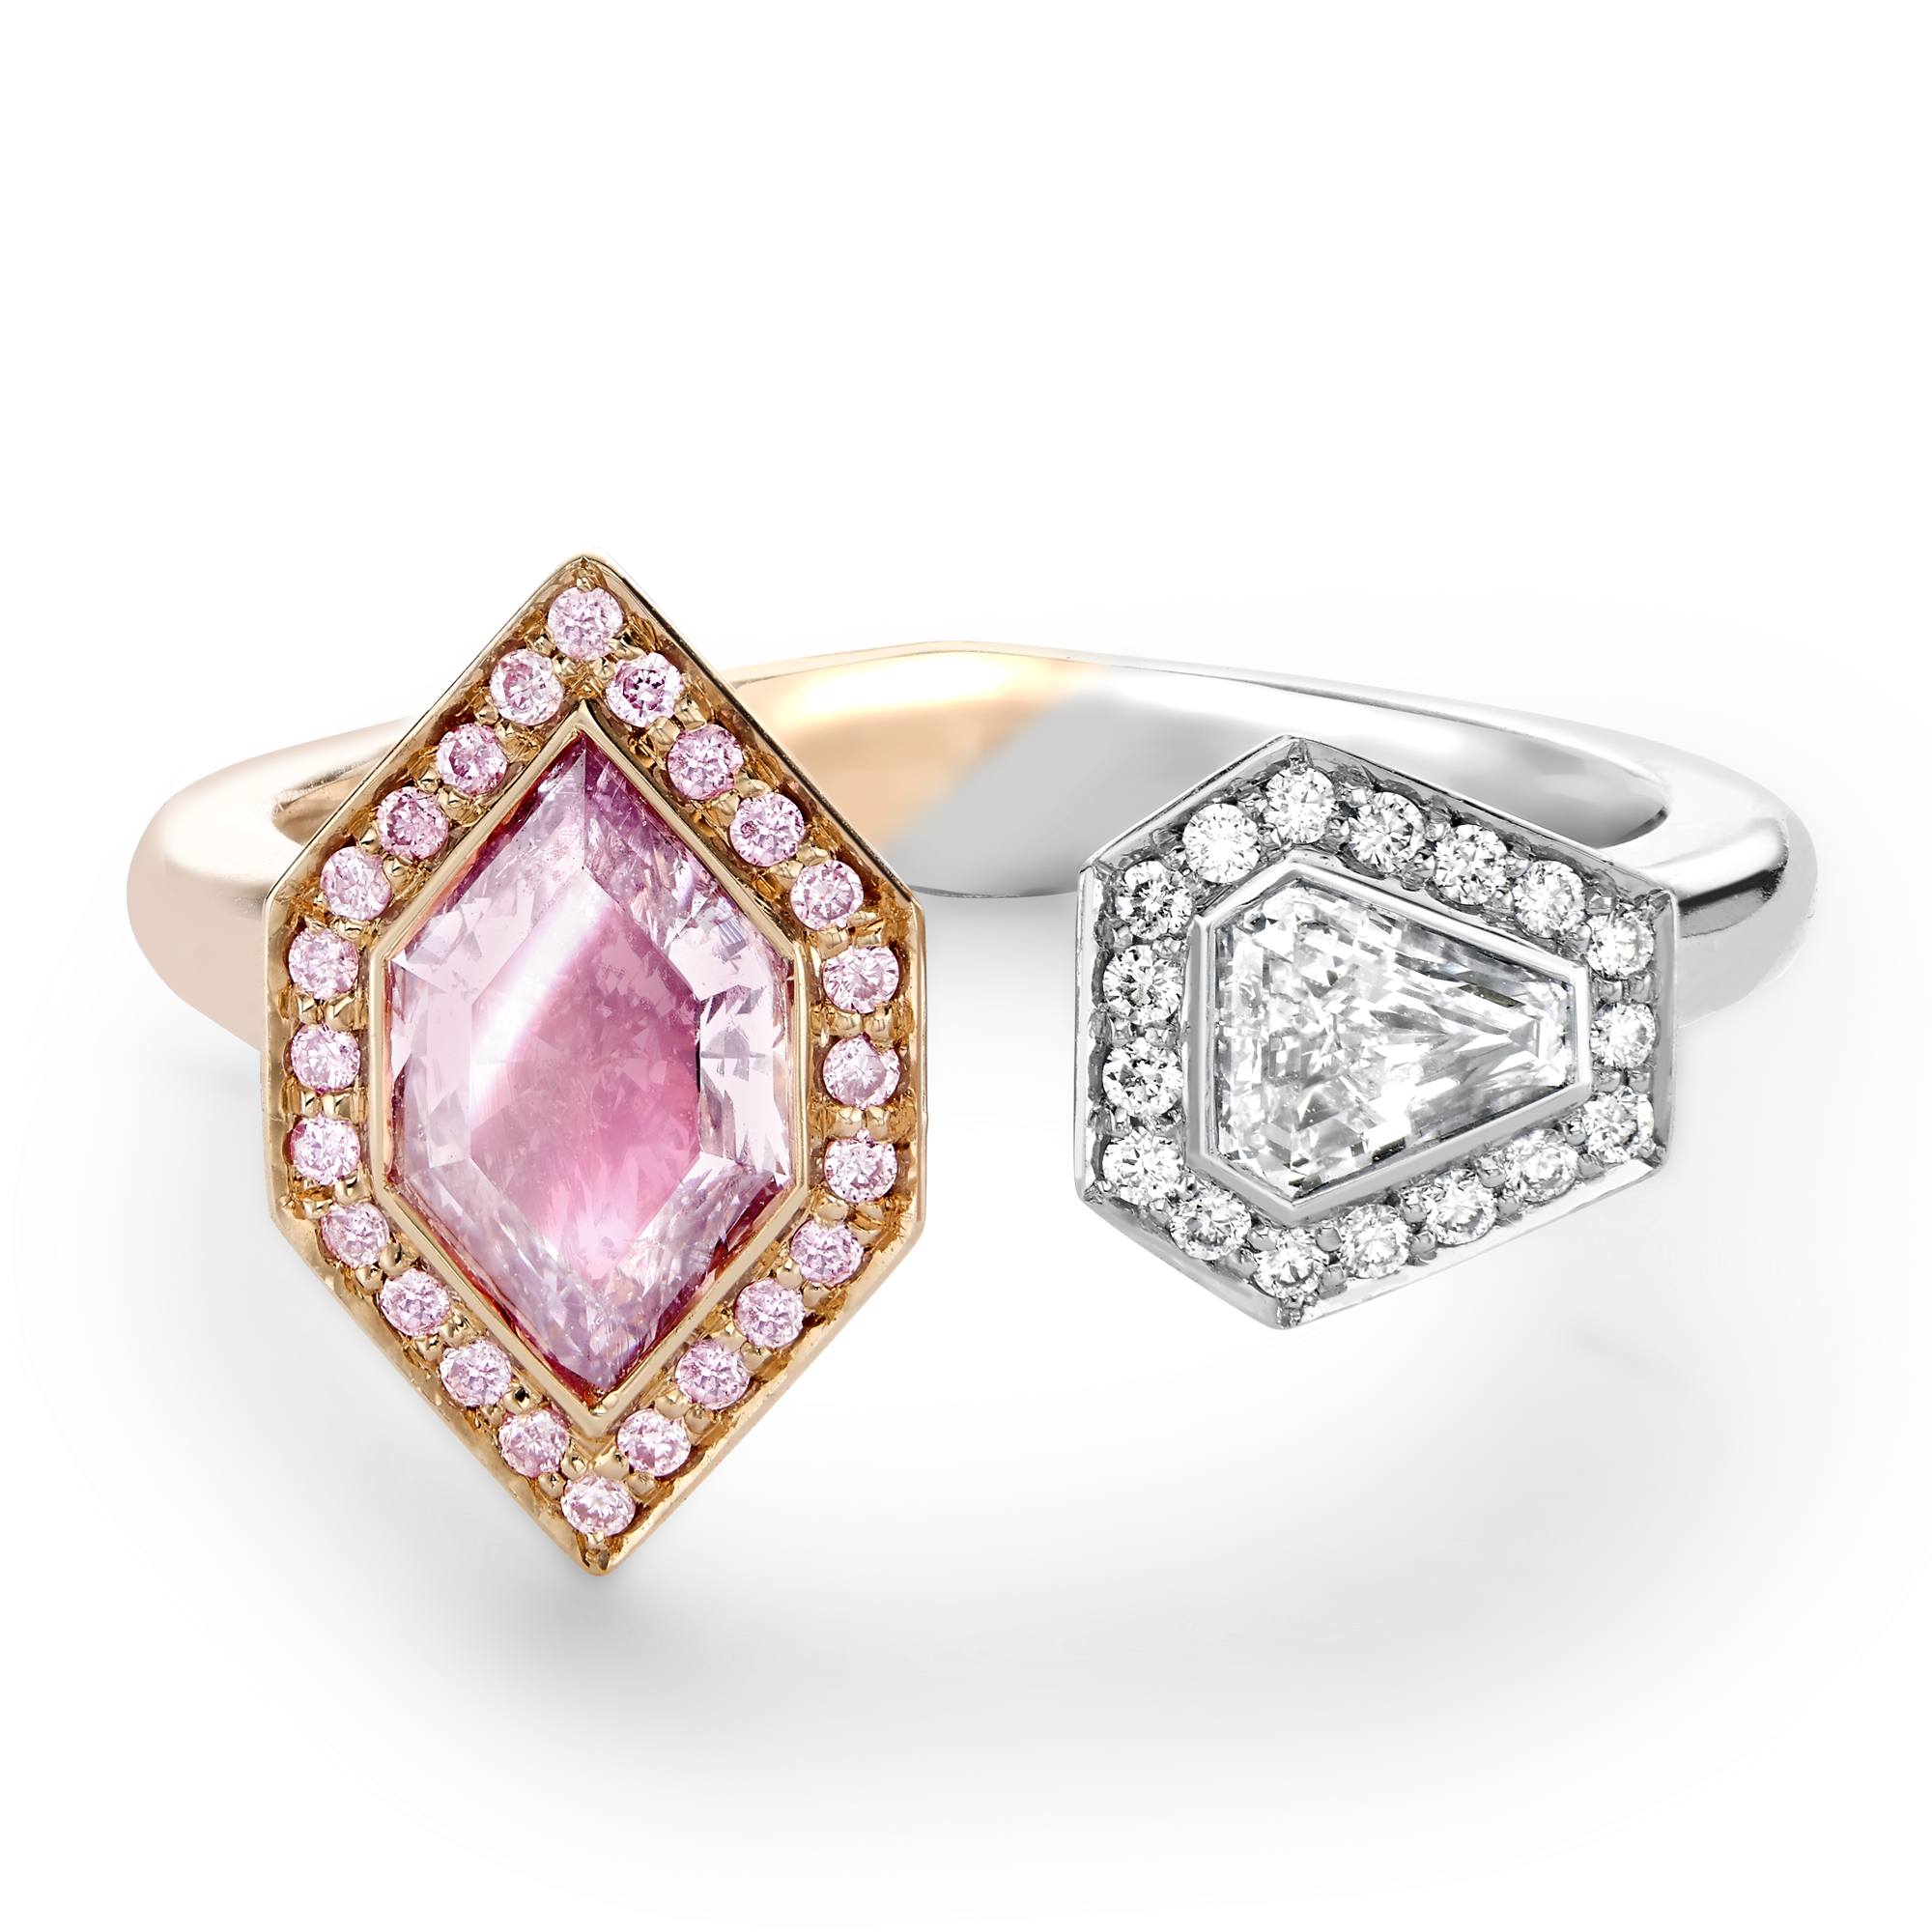 Masterpiece 0.78ct Fancy Intense Purplish-Pink Geometric Diamond Ring Hexagonal Cut, Rubover Set_2